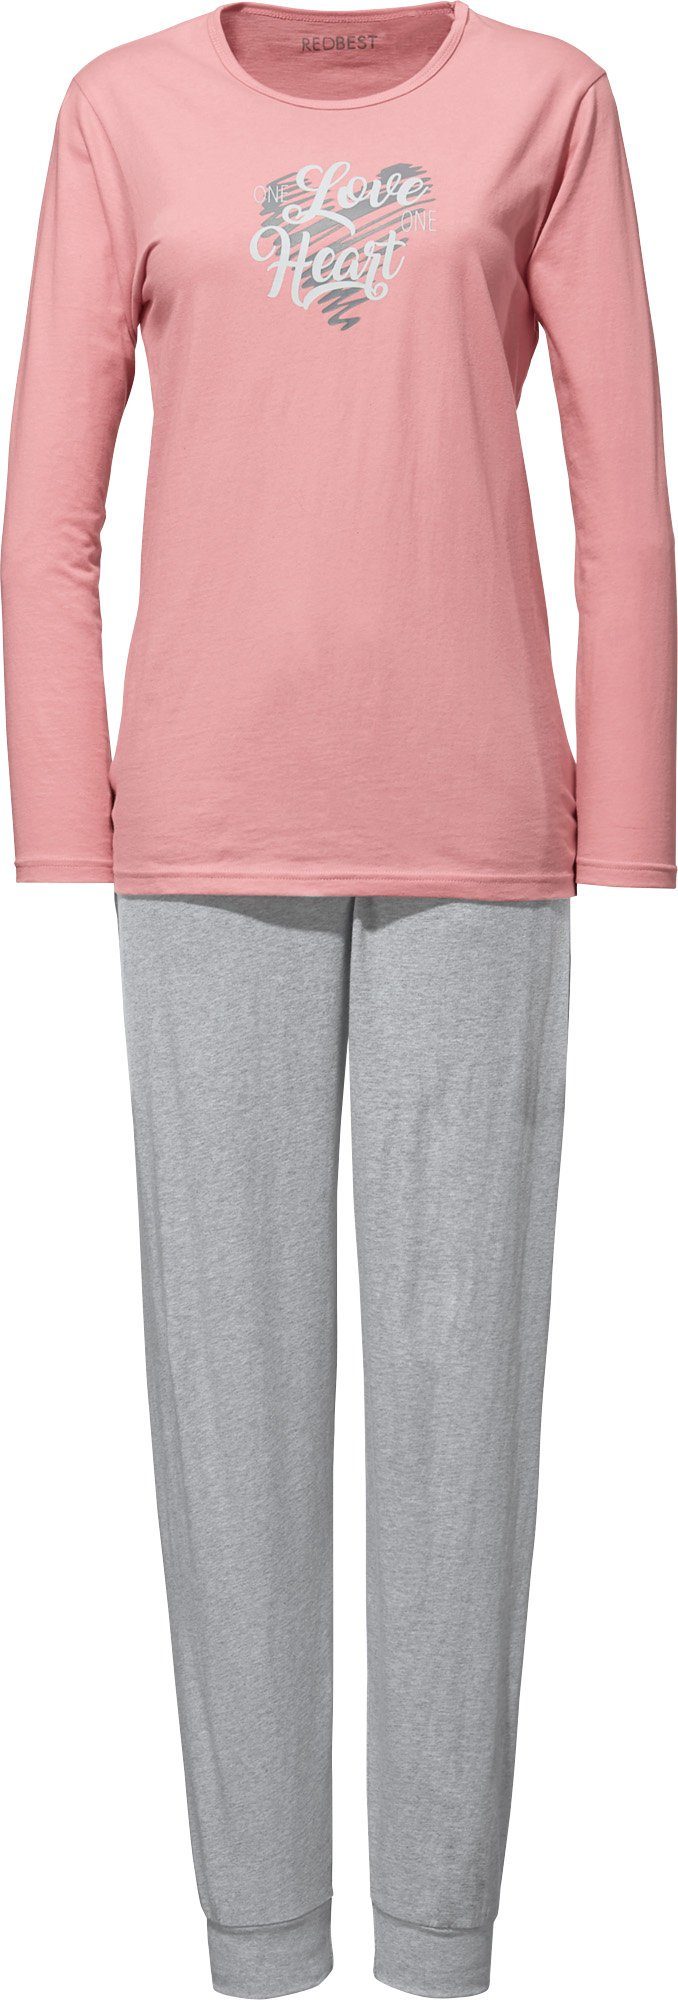 Single-Jersey Pyjama Uni Damen-Schlafanzug REDBEST